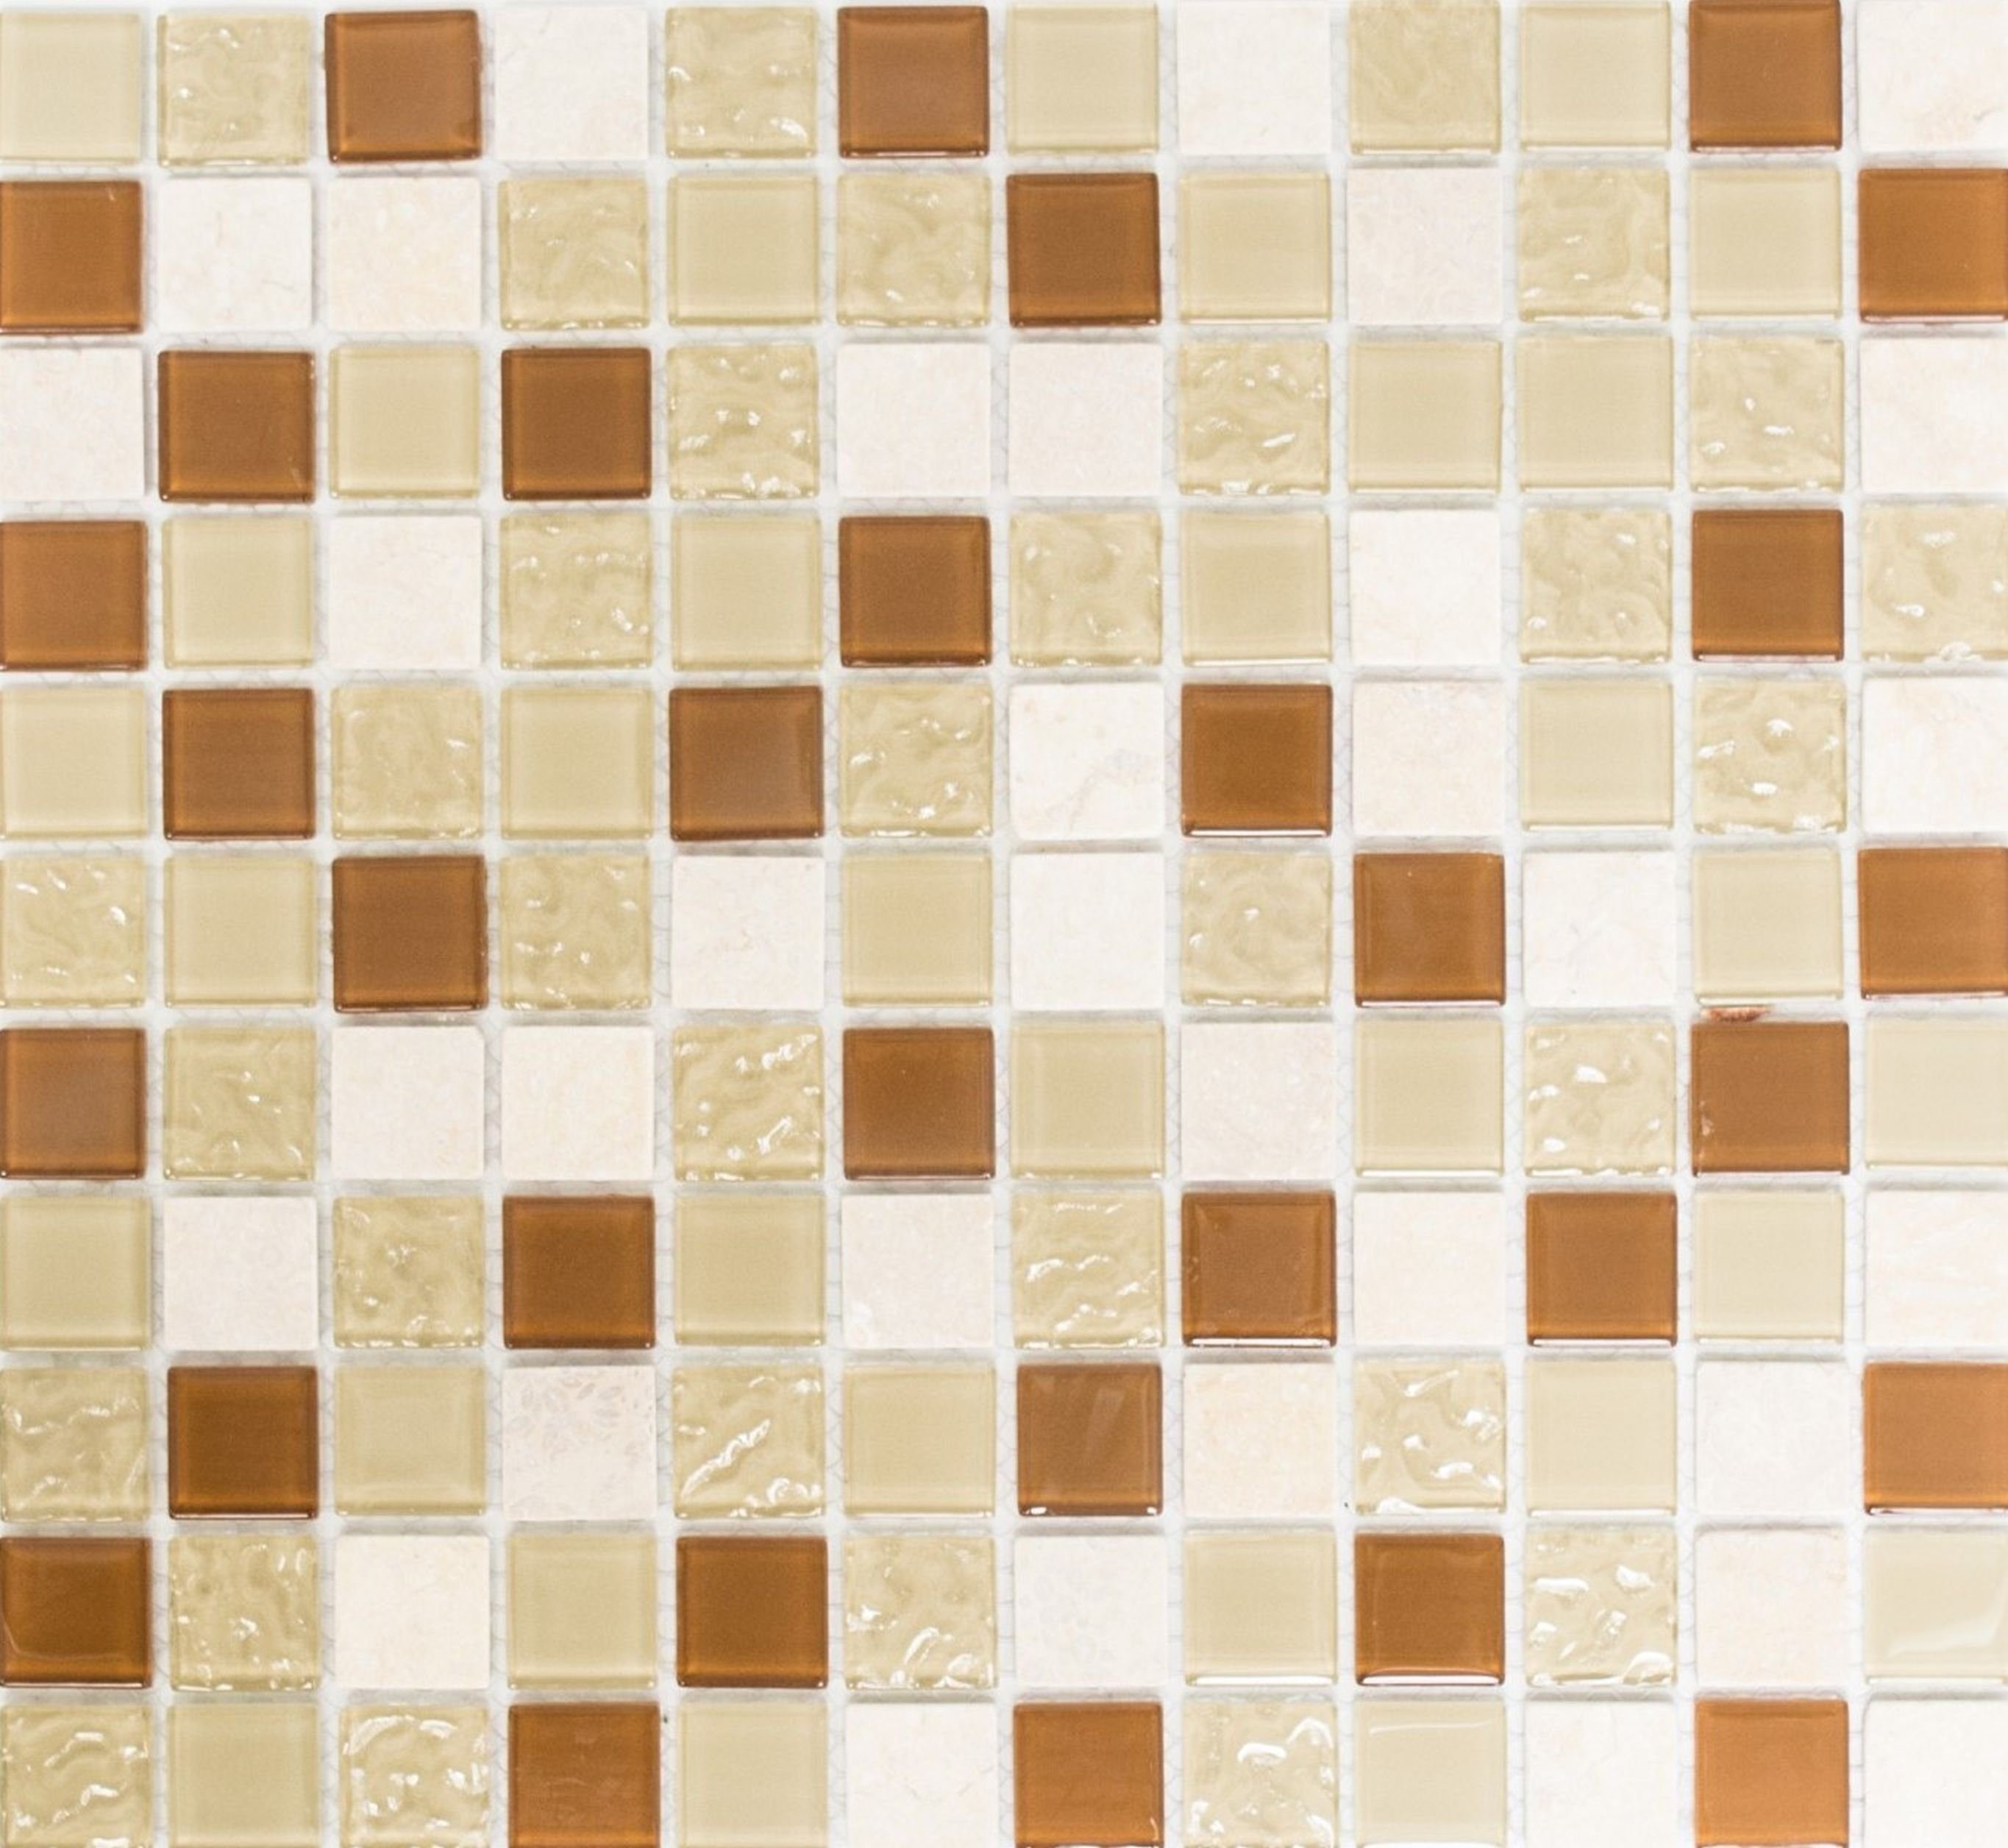 Mosani Naturstein Mosaikfliesen Rustikal Mosaik Glasmosaik beige Marmor